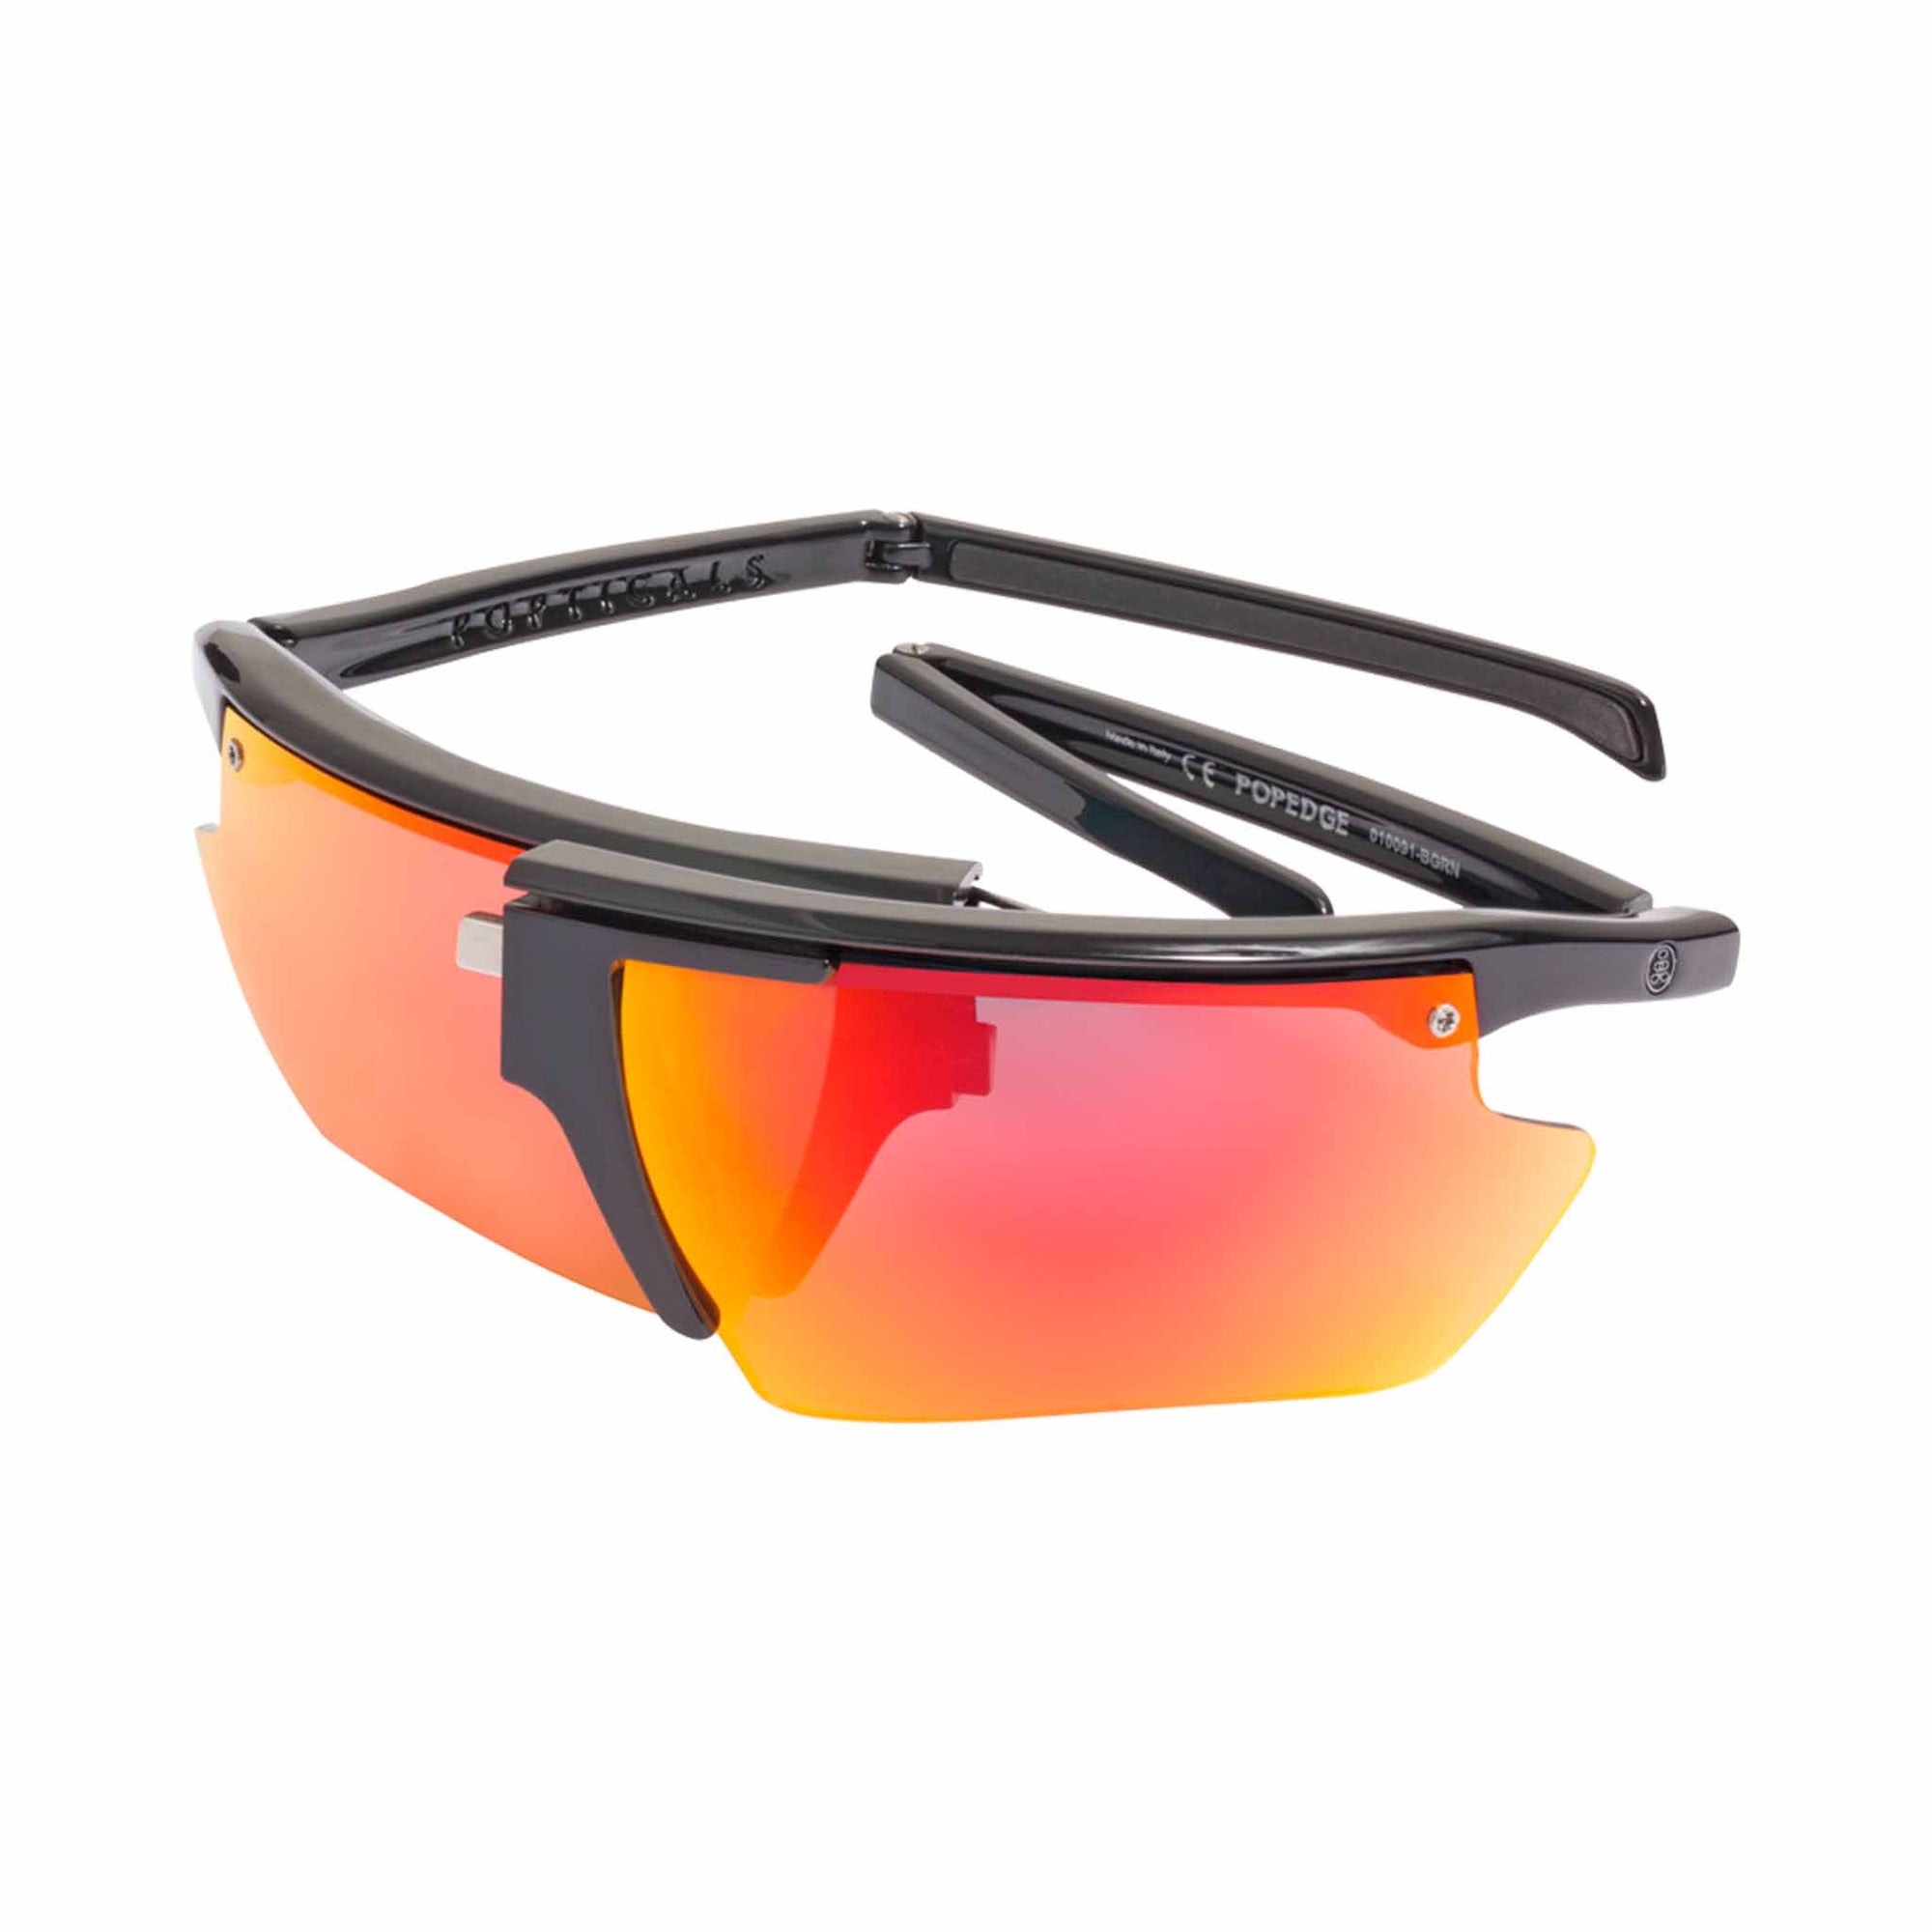 Popticals, Premium Compact Sunglasses, PopEdge, 010091-BGRN, Polarized Sunglasses, Gloss Black Frame, Gray Lenses with Red Mirror Finish, Glam View